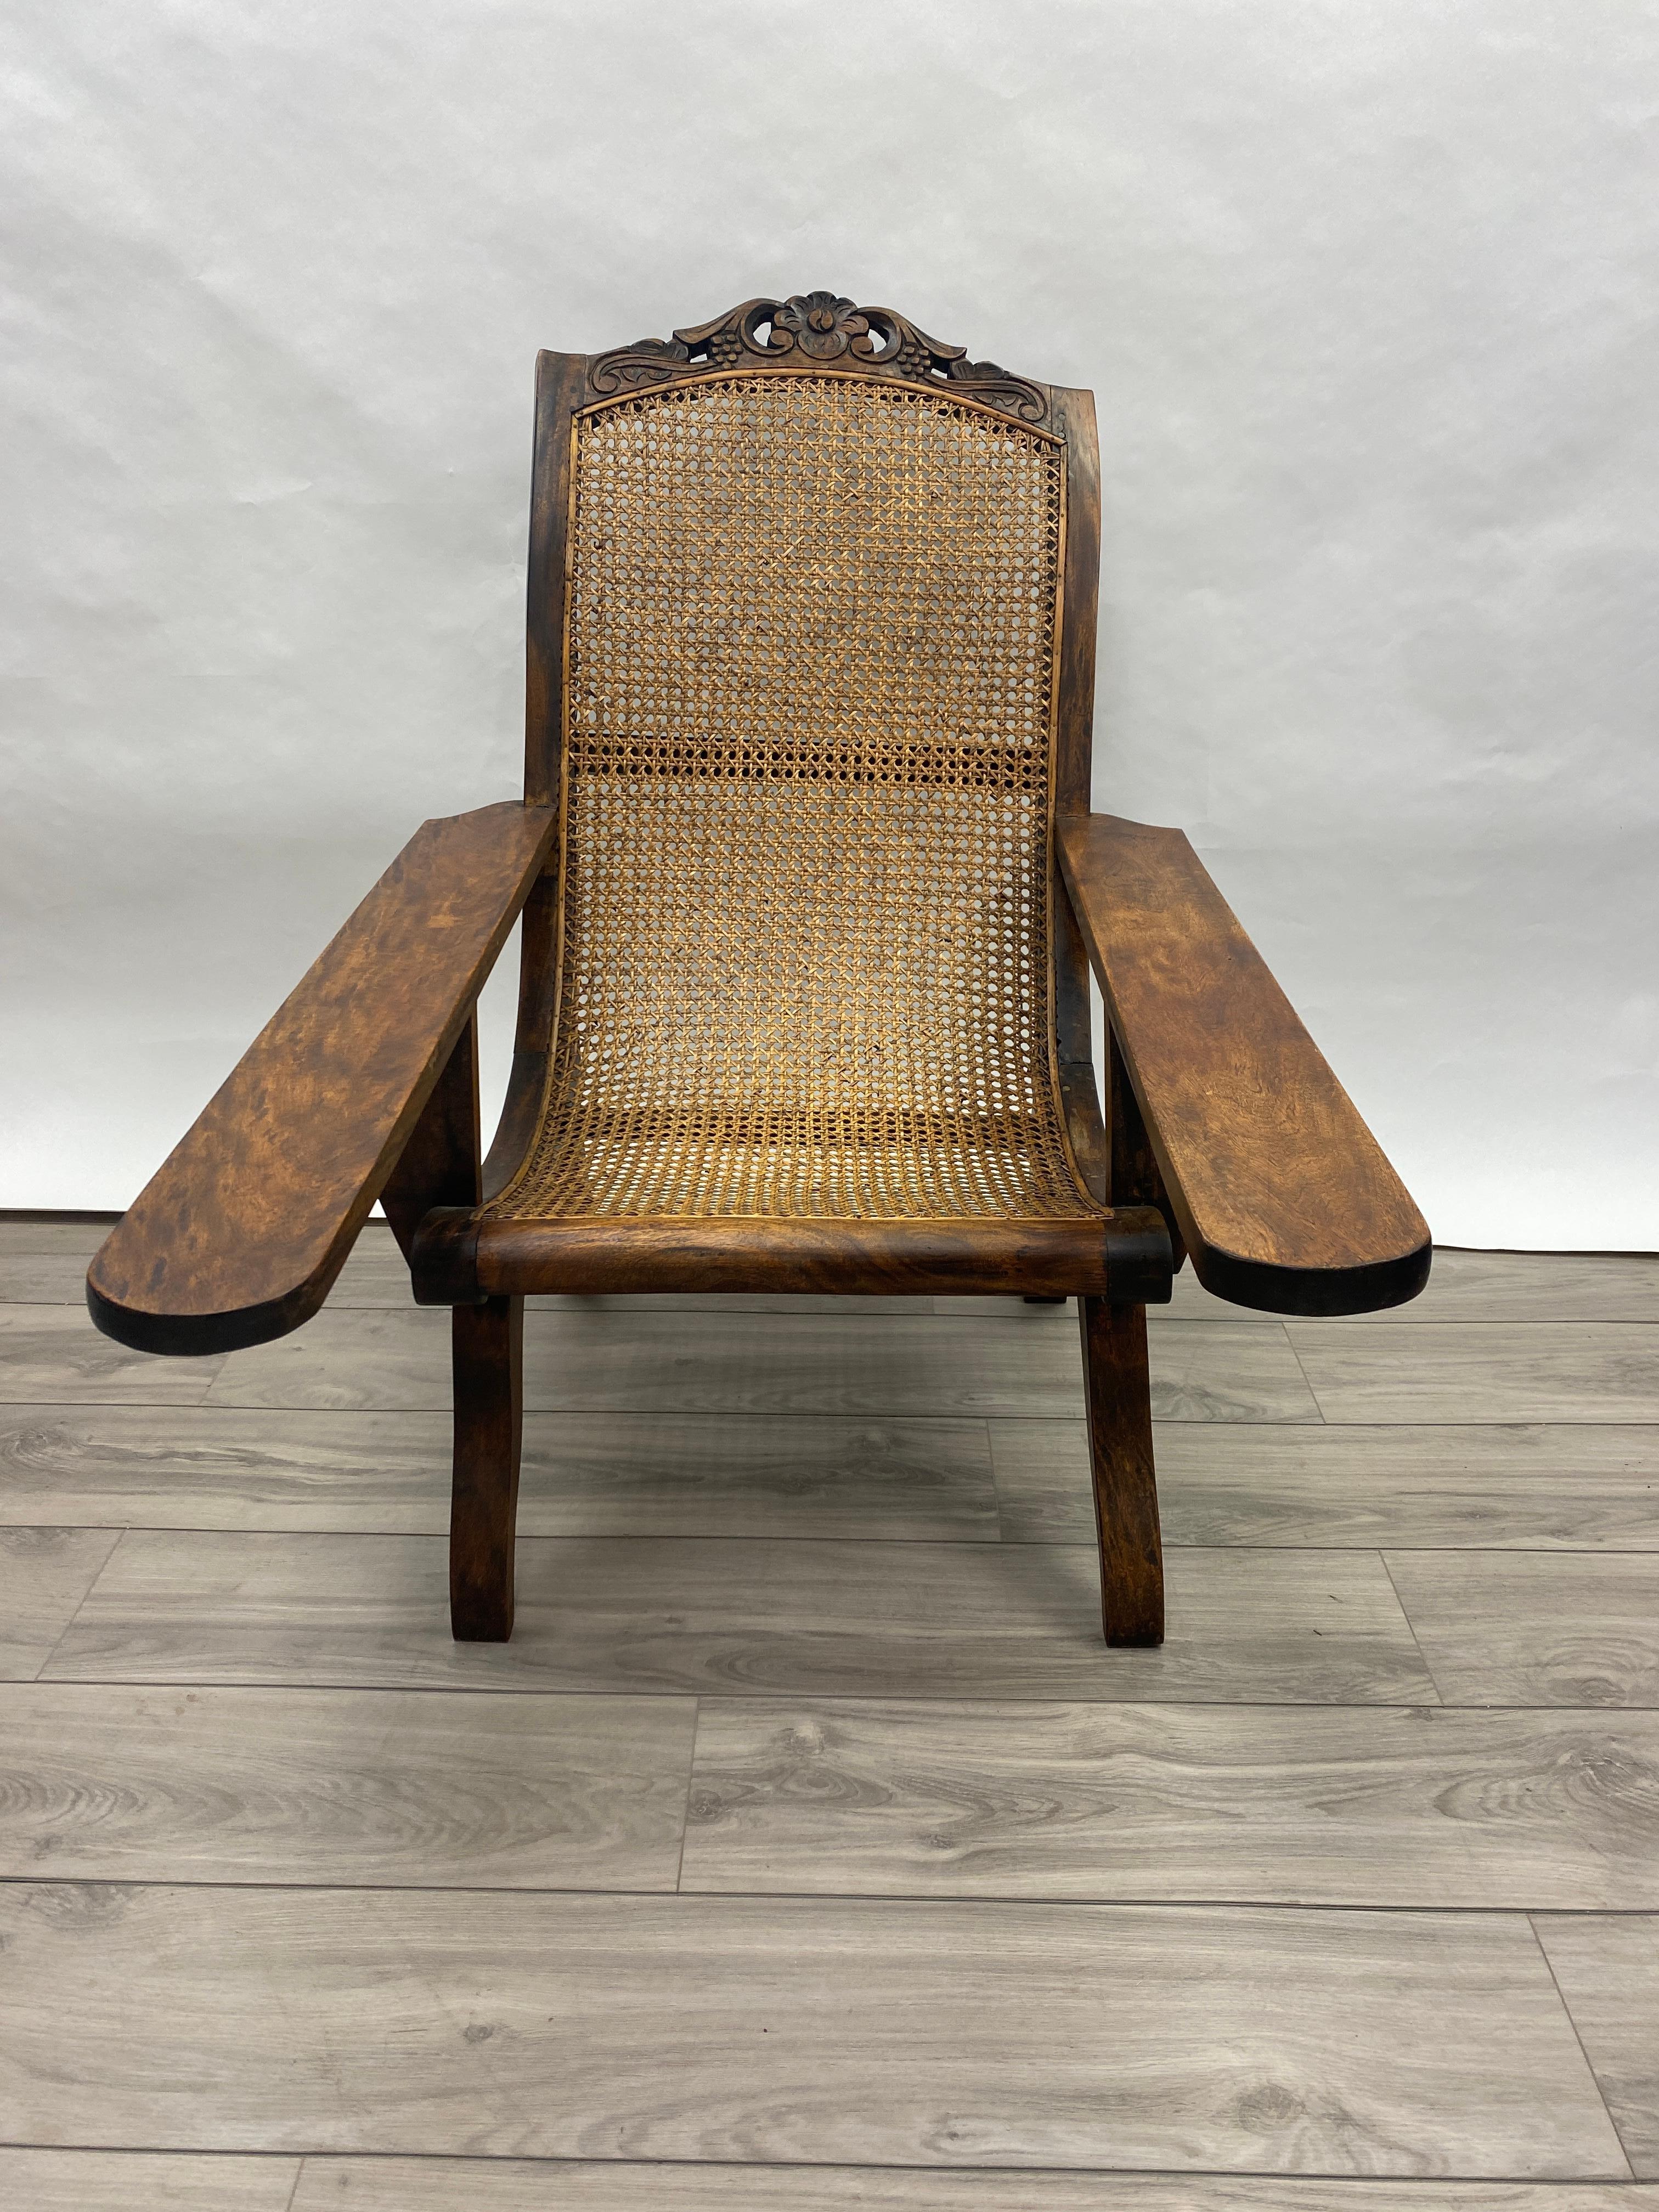 British Colonial 19th Century English Colonial Teak Plantation Chair